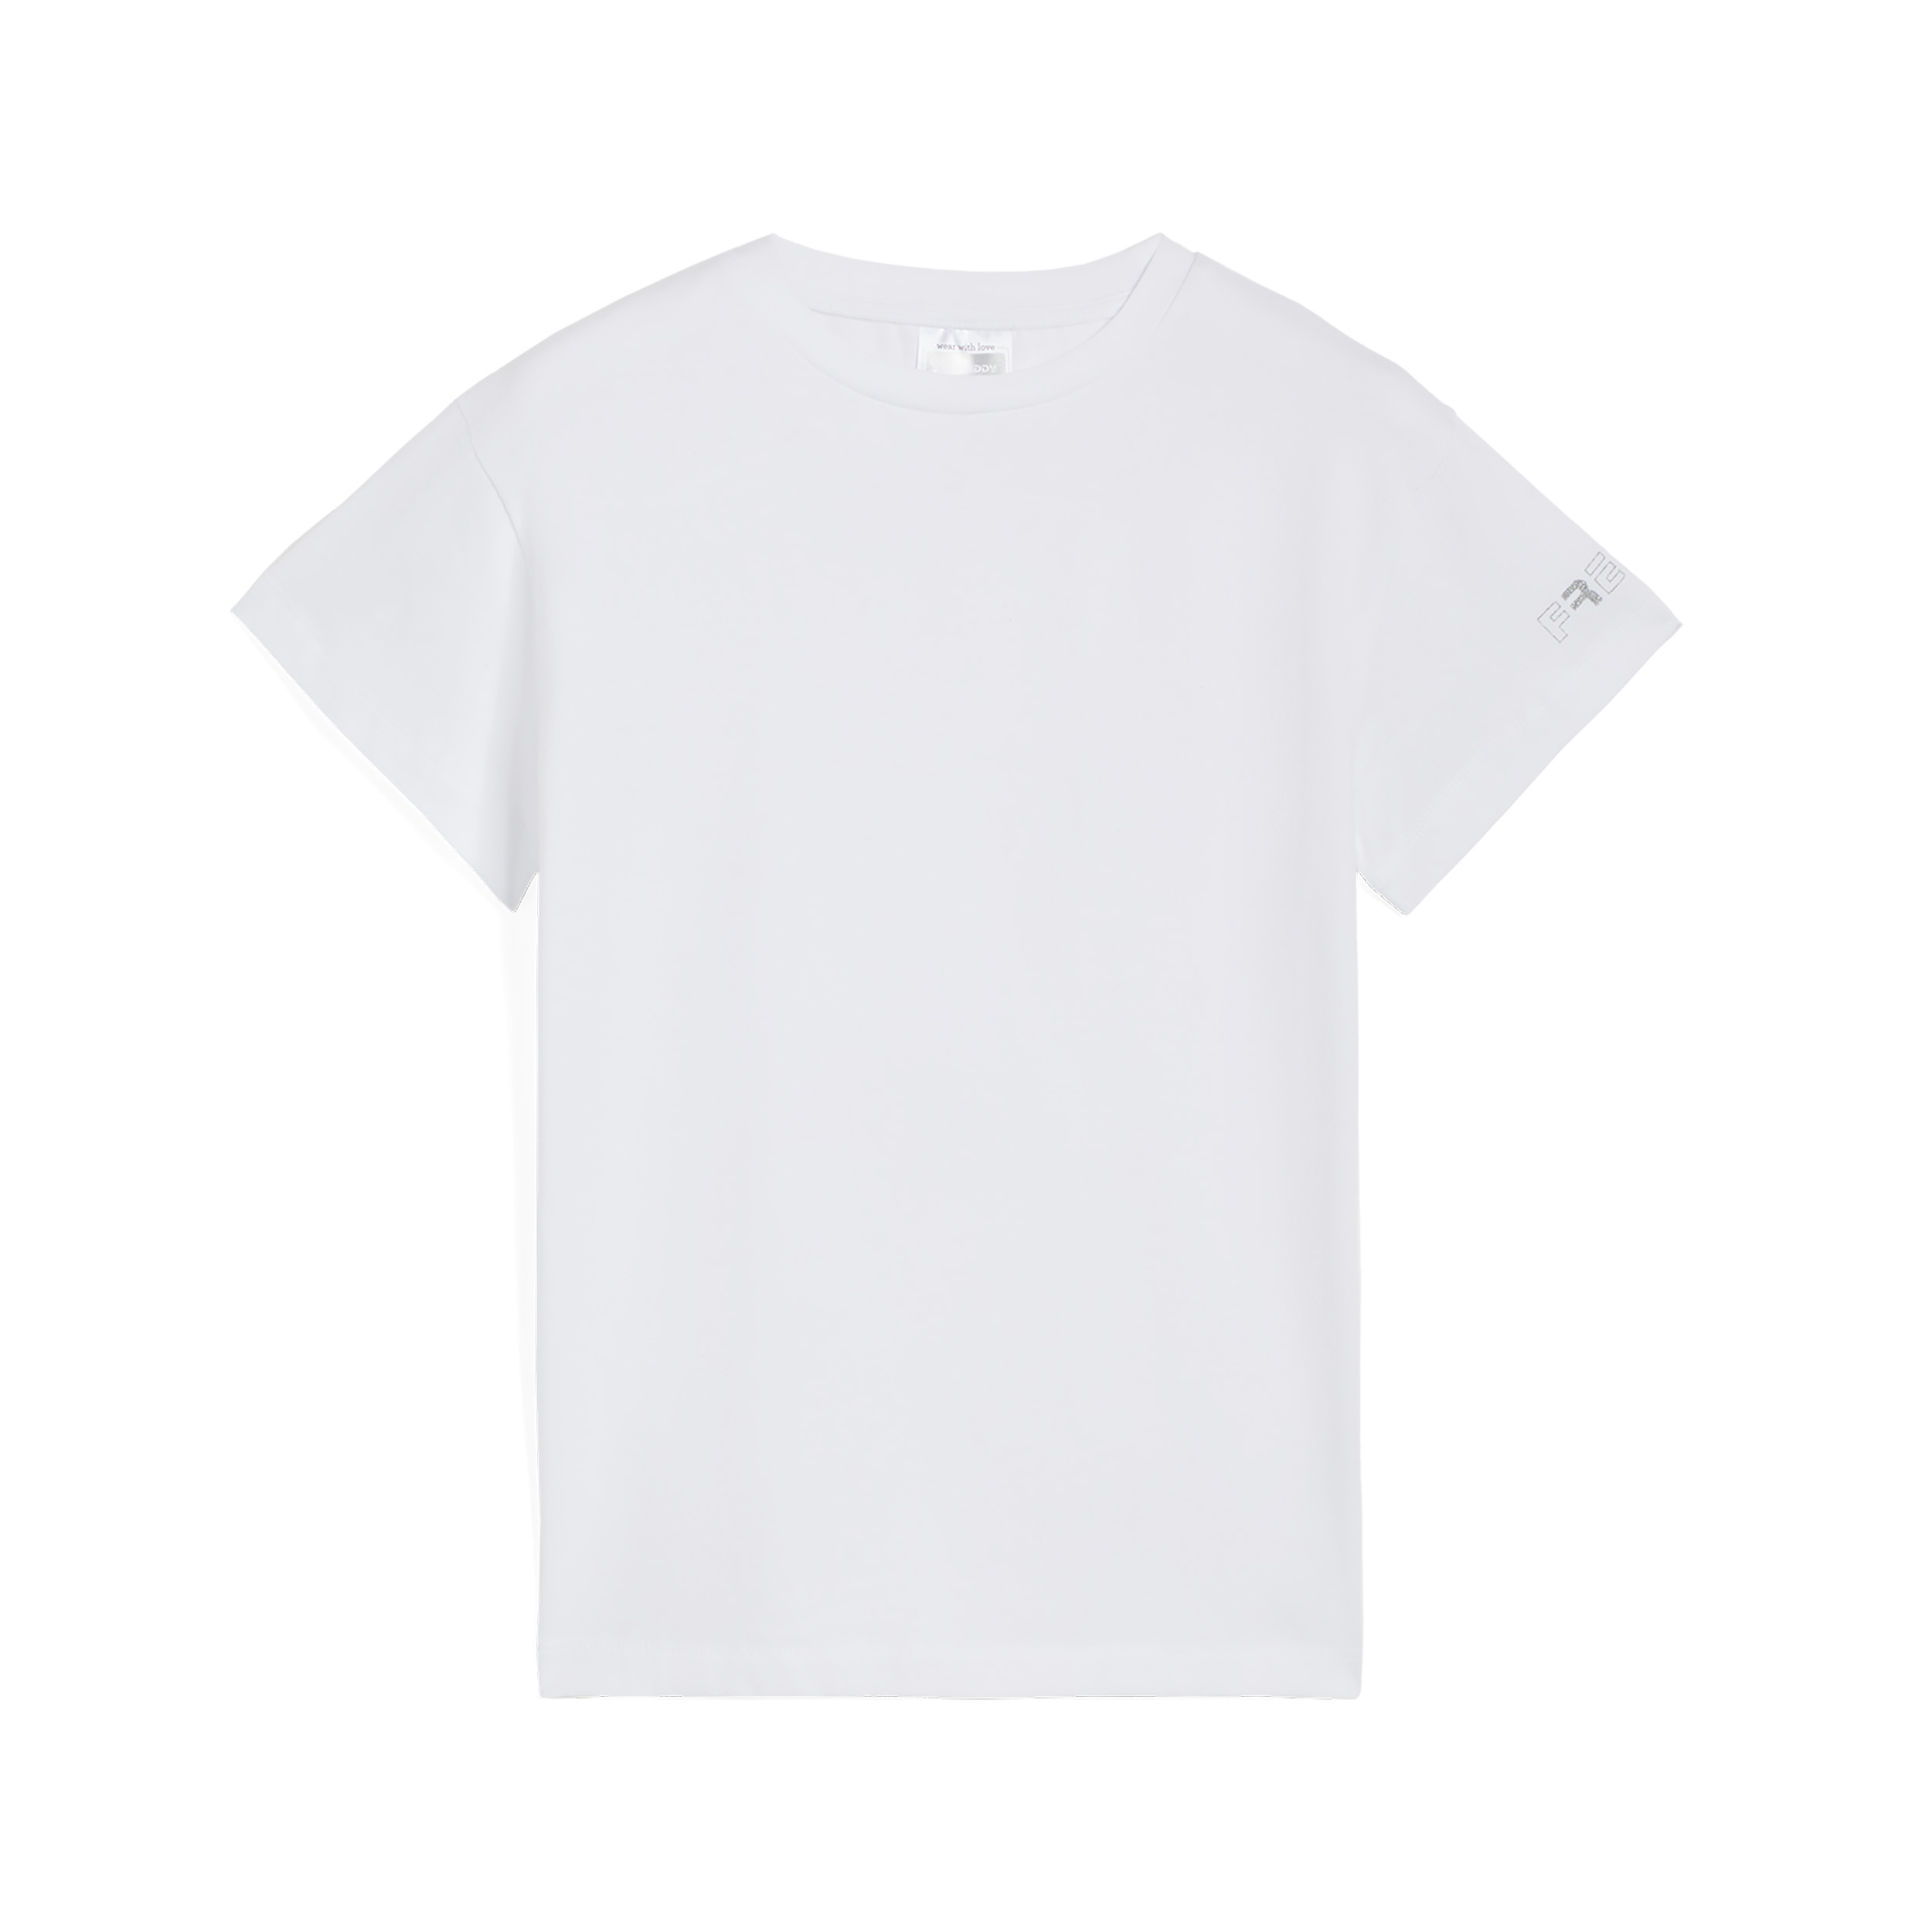 Freddy T-shirt da bambina regular fit con logo sulla manica Bianco Junior 8 Anni